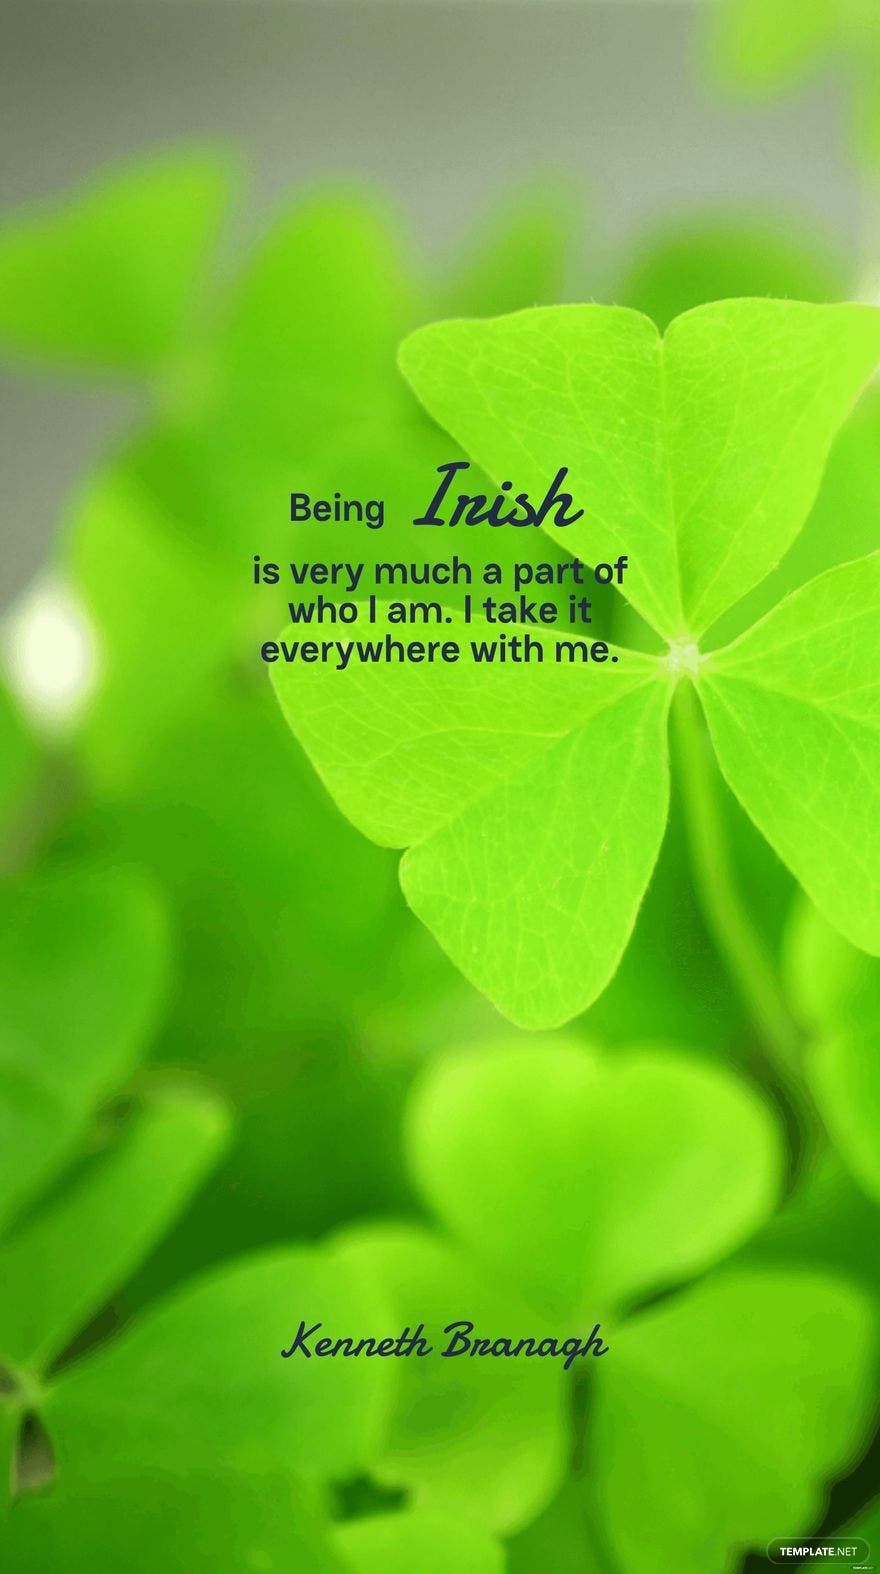 Kenneth Branagh - Being Irish, I always had this love of words.